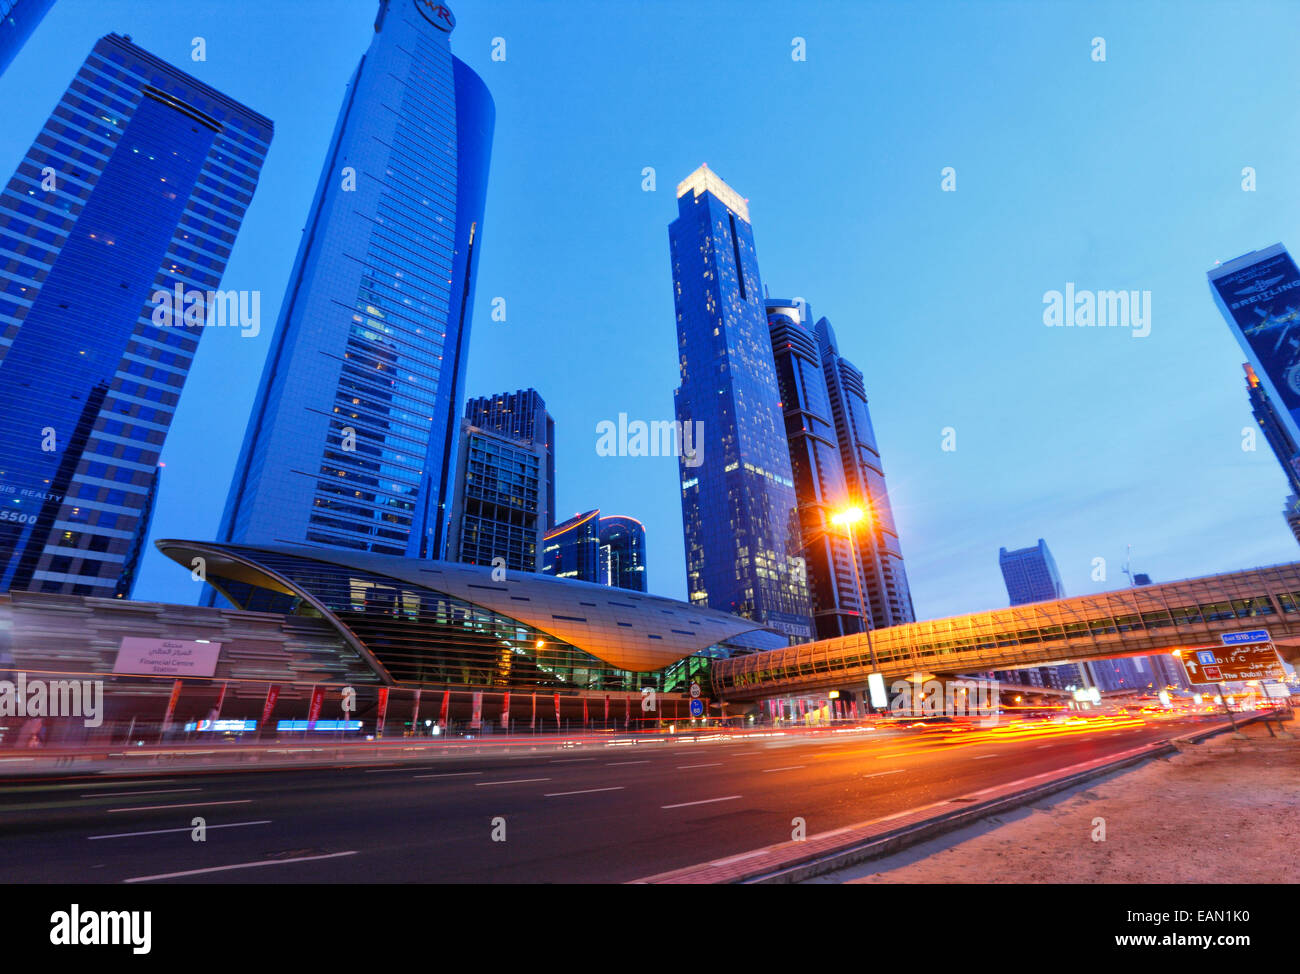 Moderner Architektur der Metro Bahnhof Sheikh Zayed Road in Dubai. Stockfoto